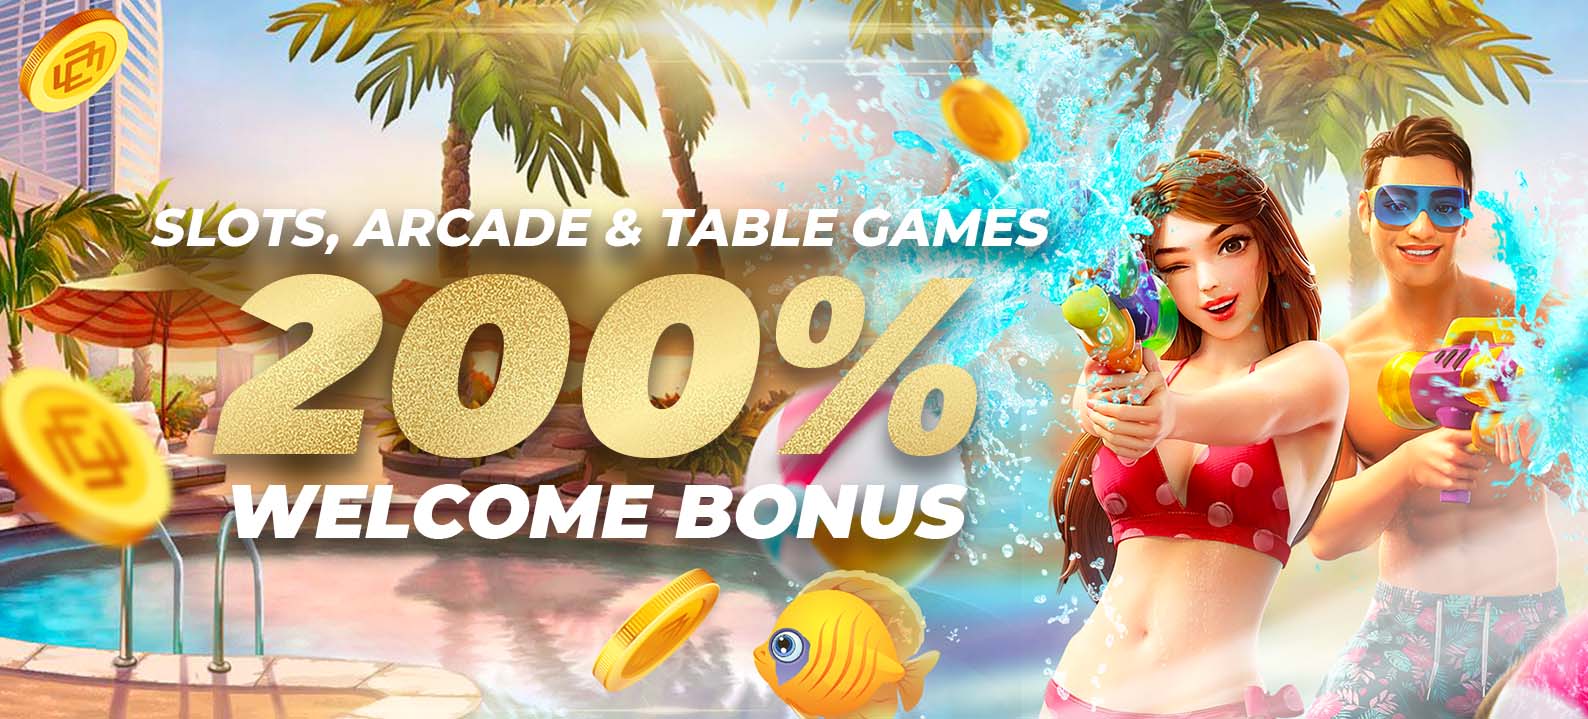 Arcade, Slots & Table Games 200% First Deposit Bonus 888 PHP